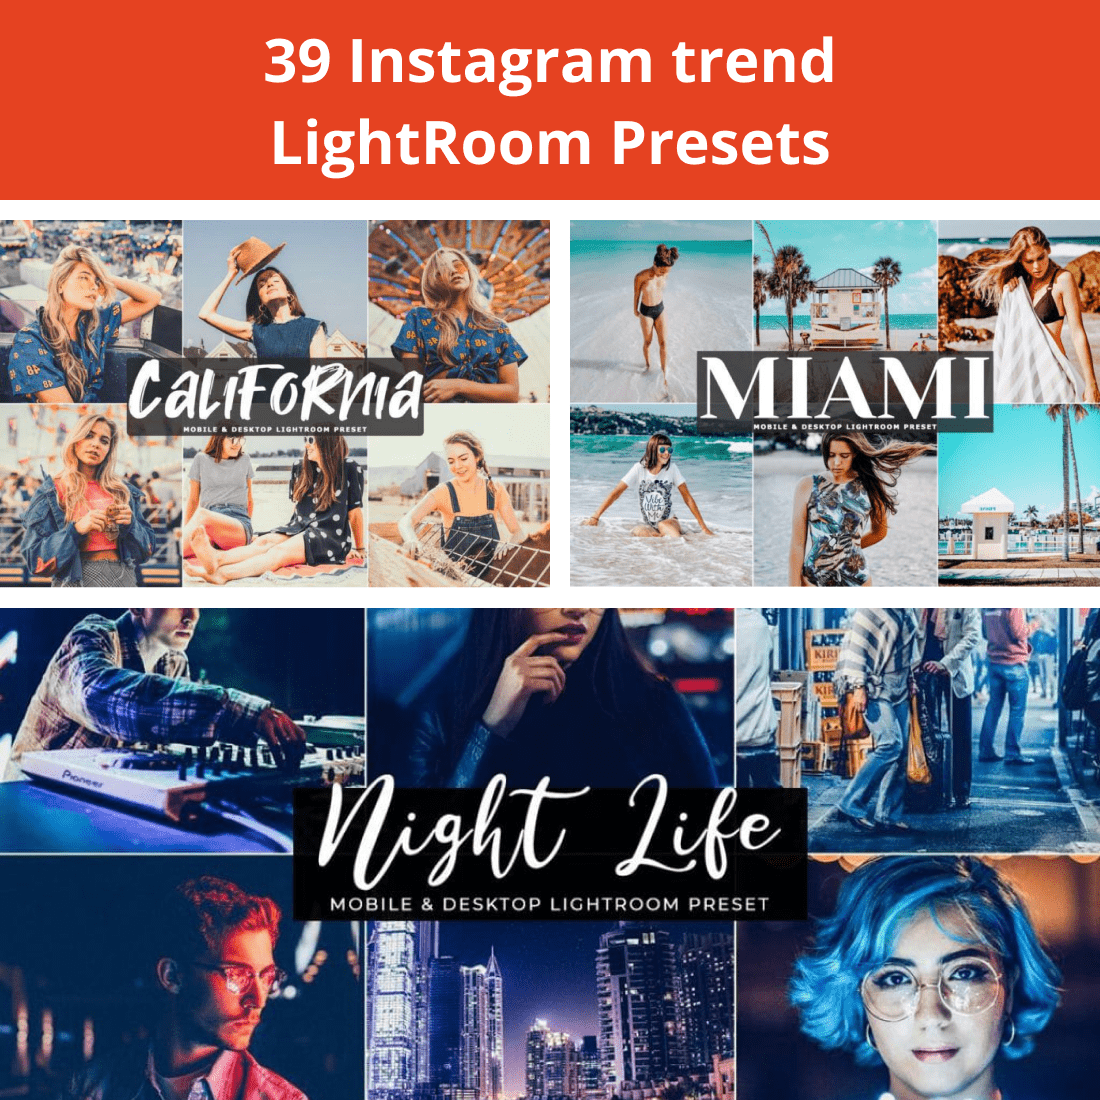 42.1 - 39 Instagram trend 2021 LightRoom Presets